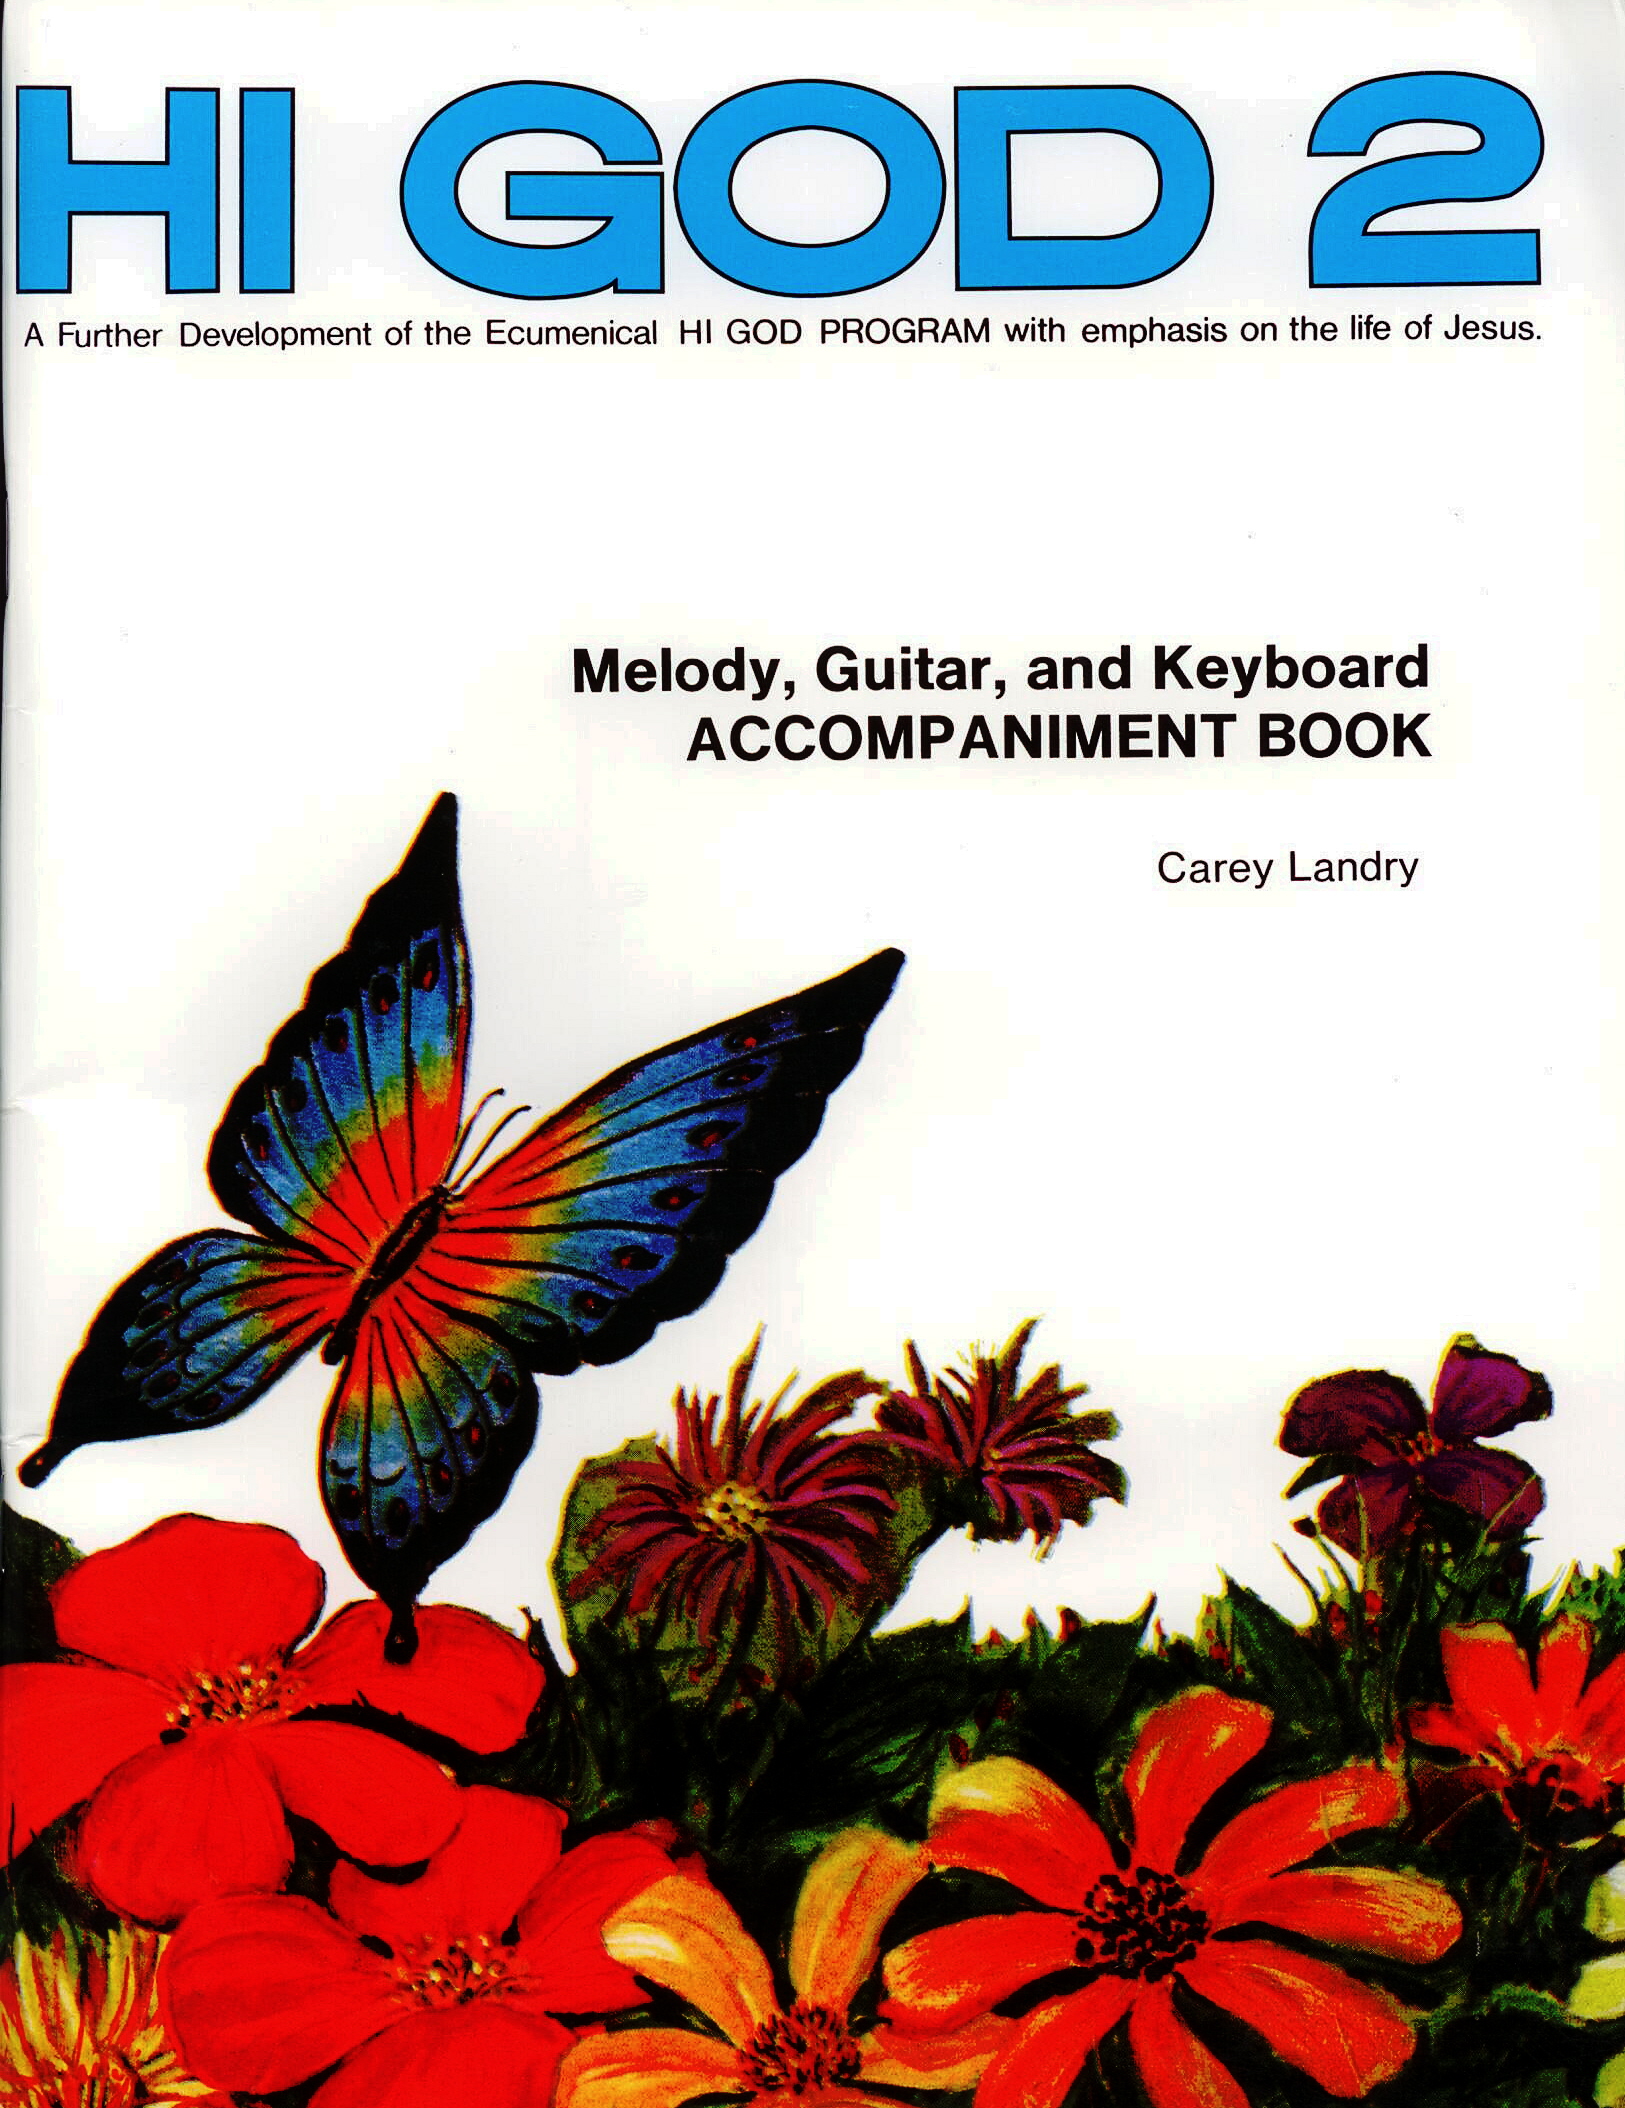 Hi God 2 Accompaniment Book, Title; Carey Landry, Carol Kinghorn, Artists